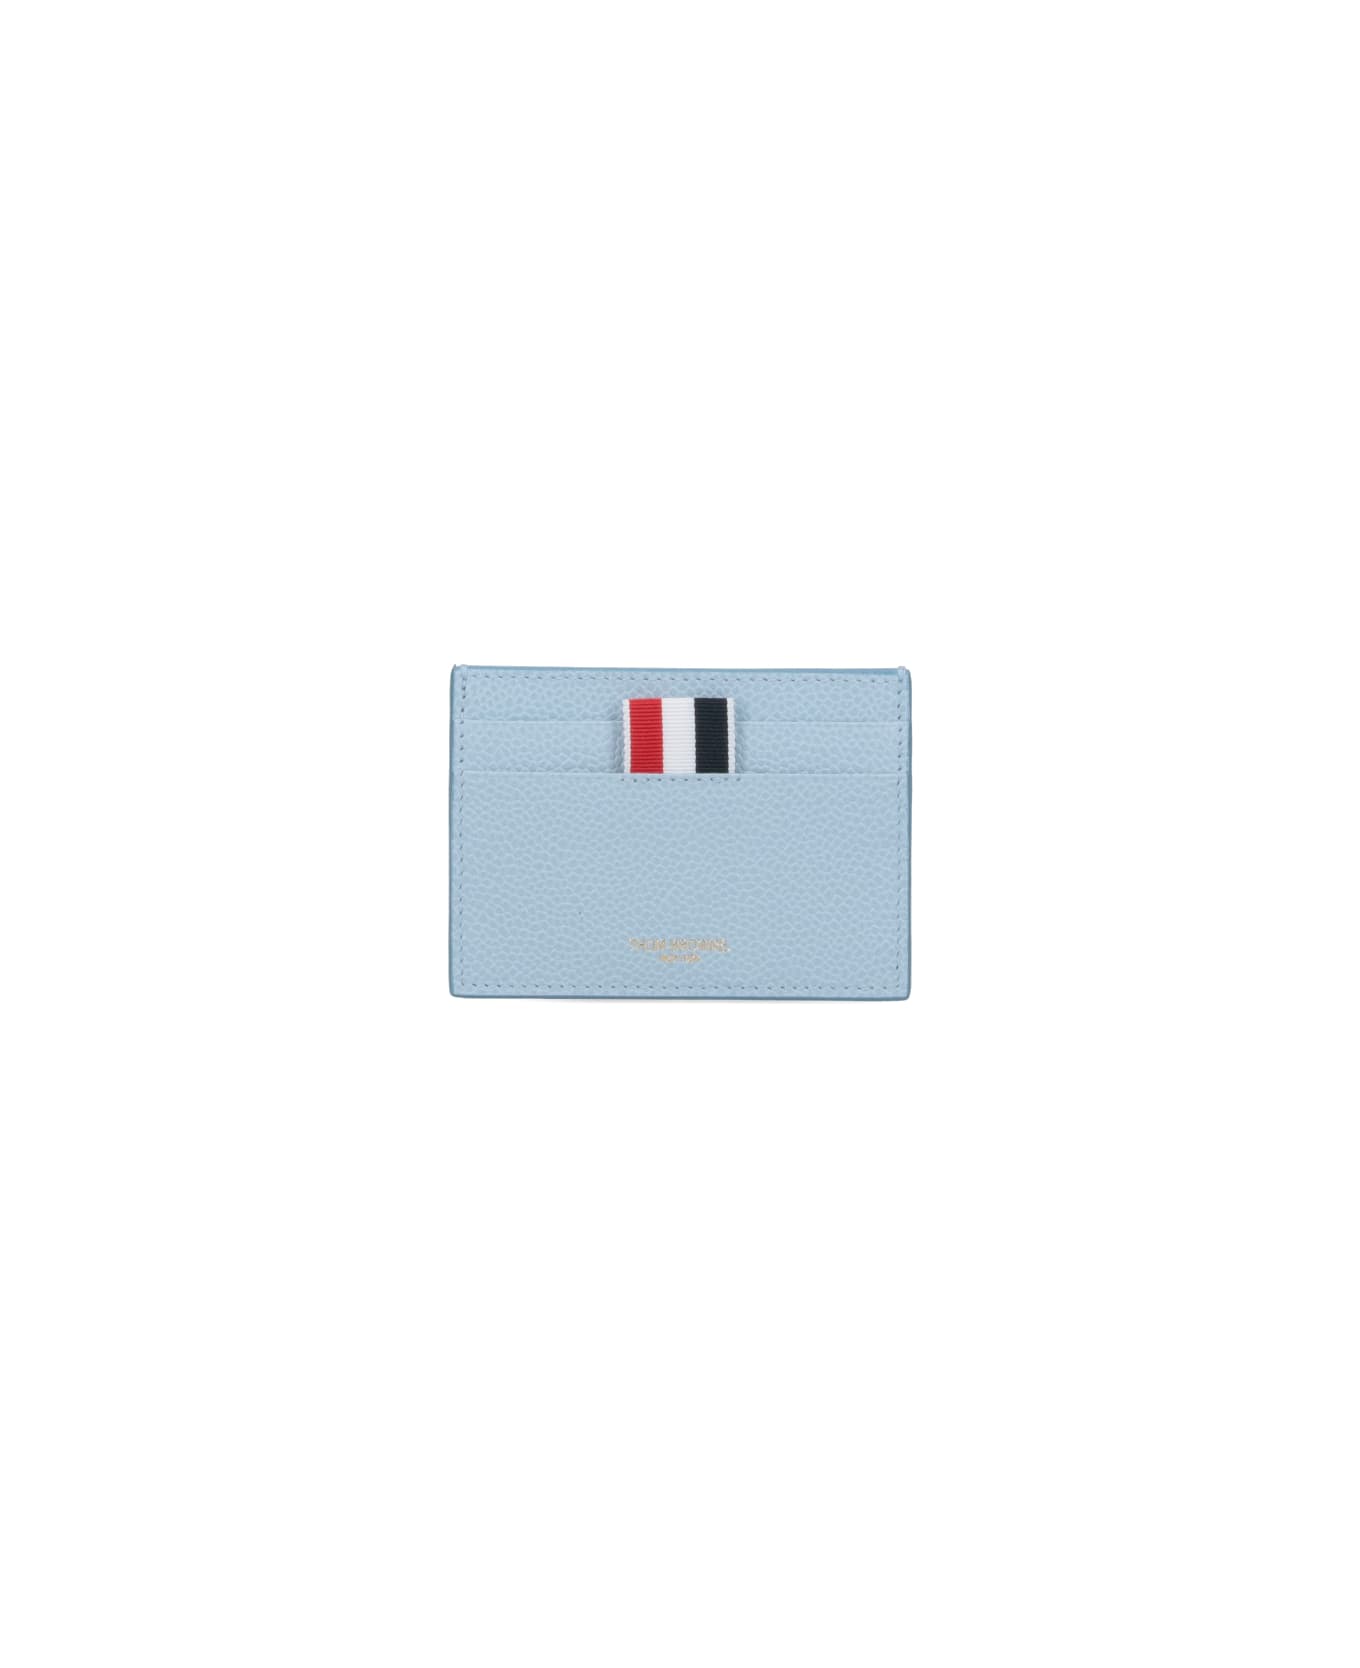 Thom Browne "pebble Grain" Card Holder - Light Blue